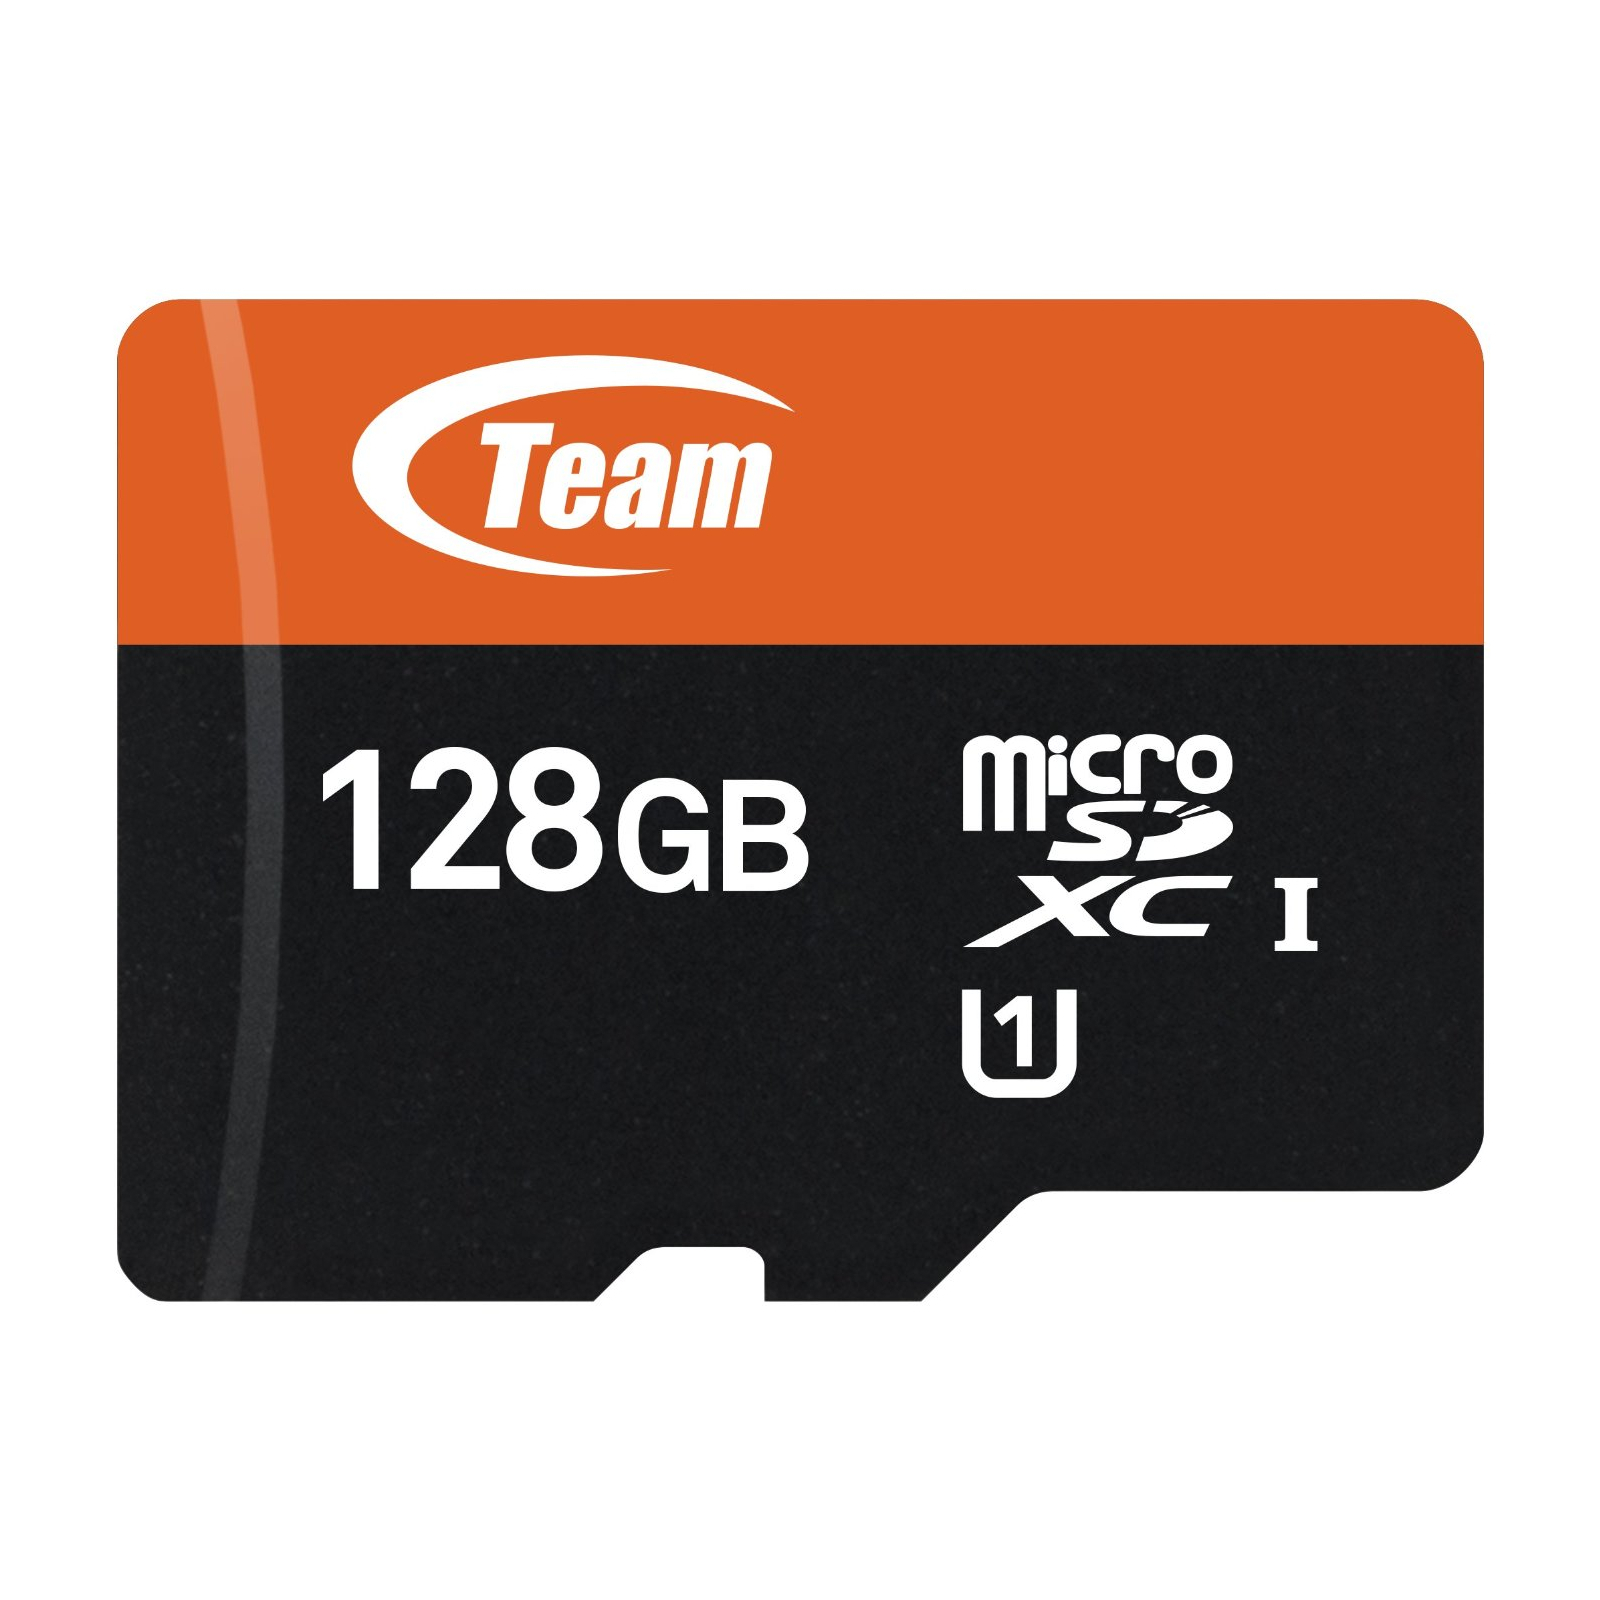 Карта пам'яті Team 128GB microSDXC Class 10 UHS-I (TUSDX128GUHS03)